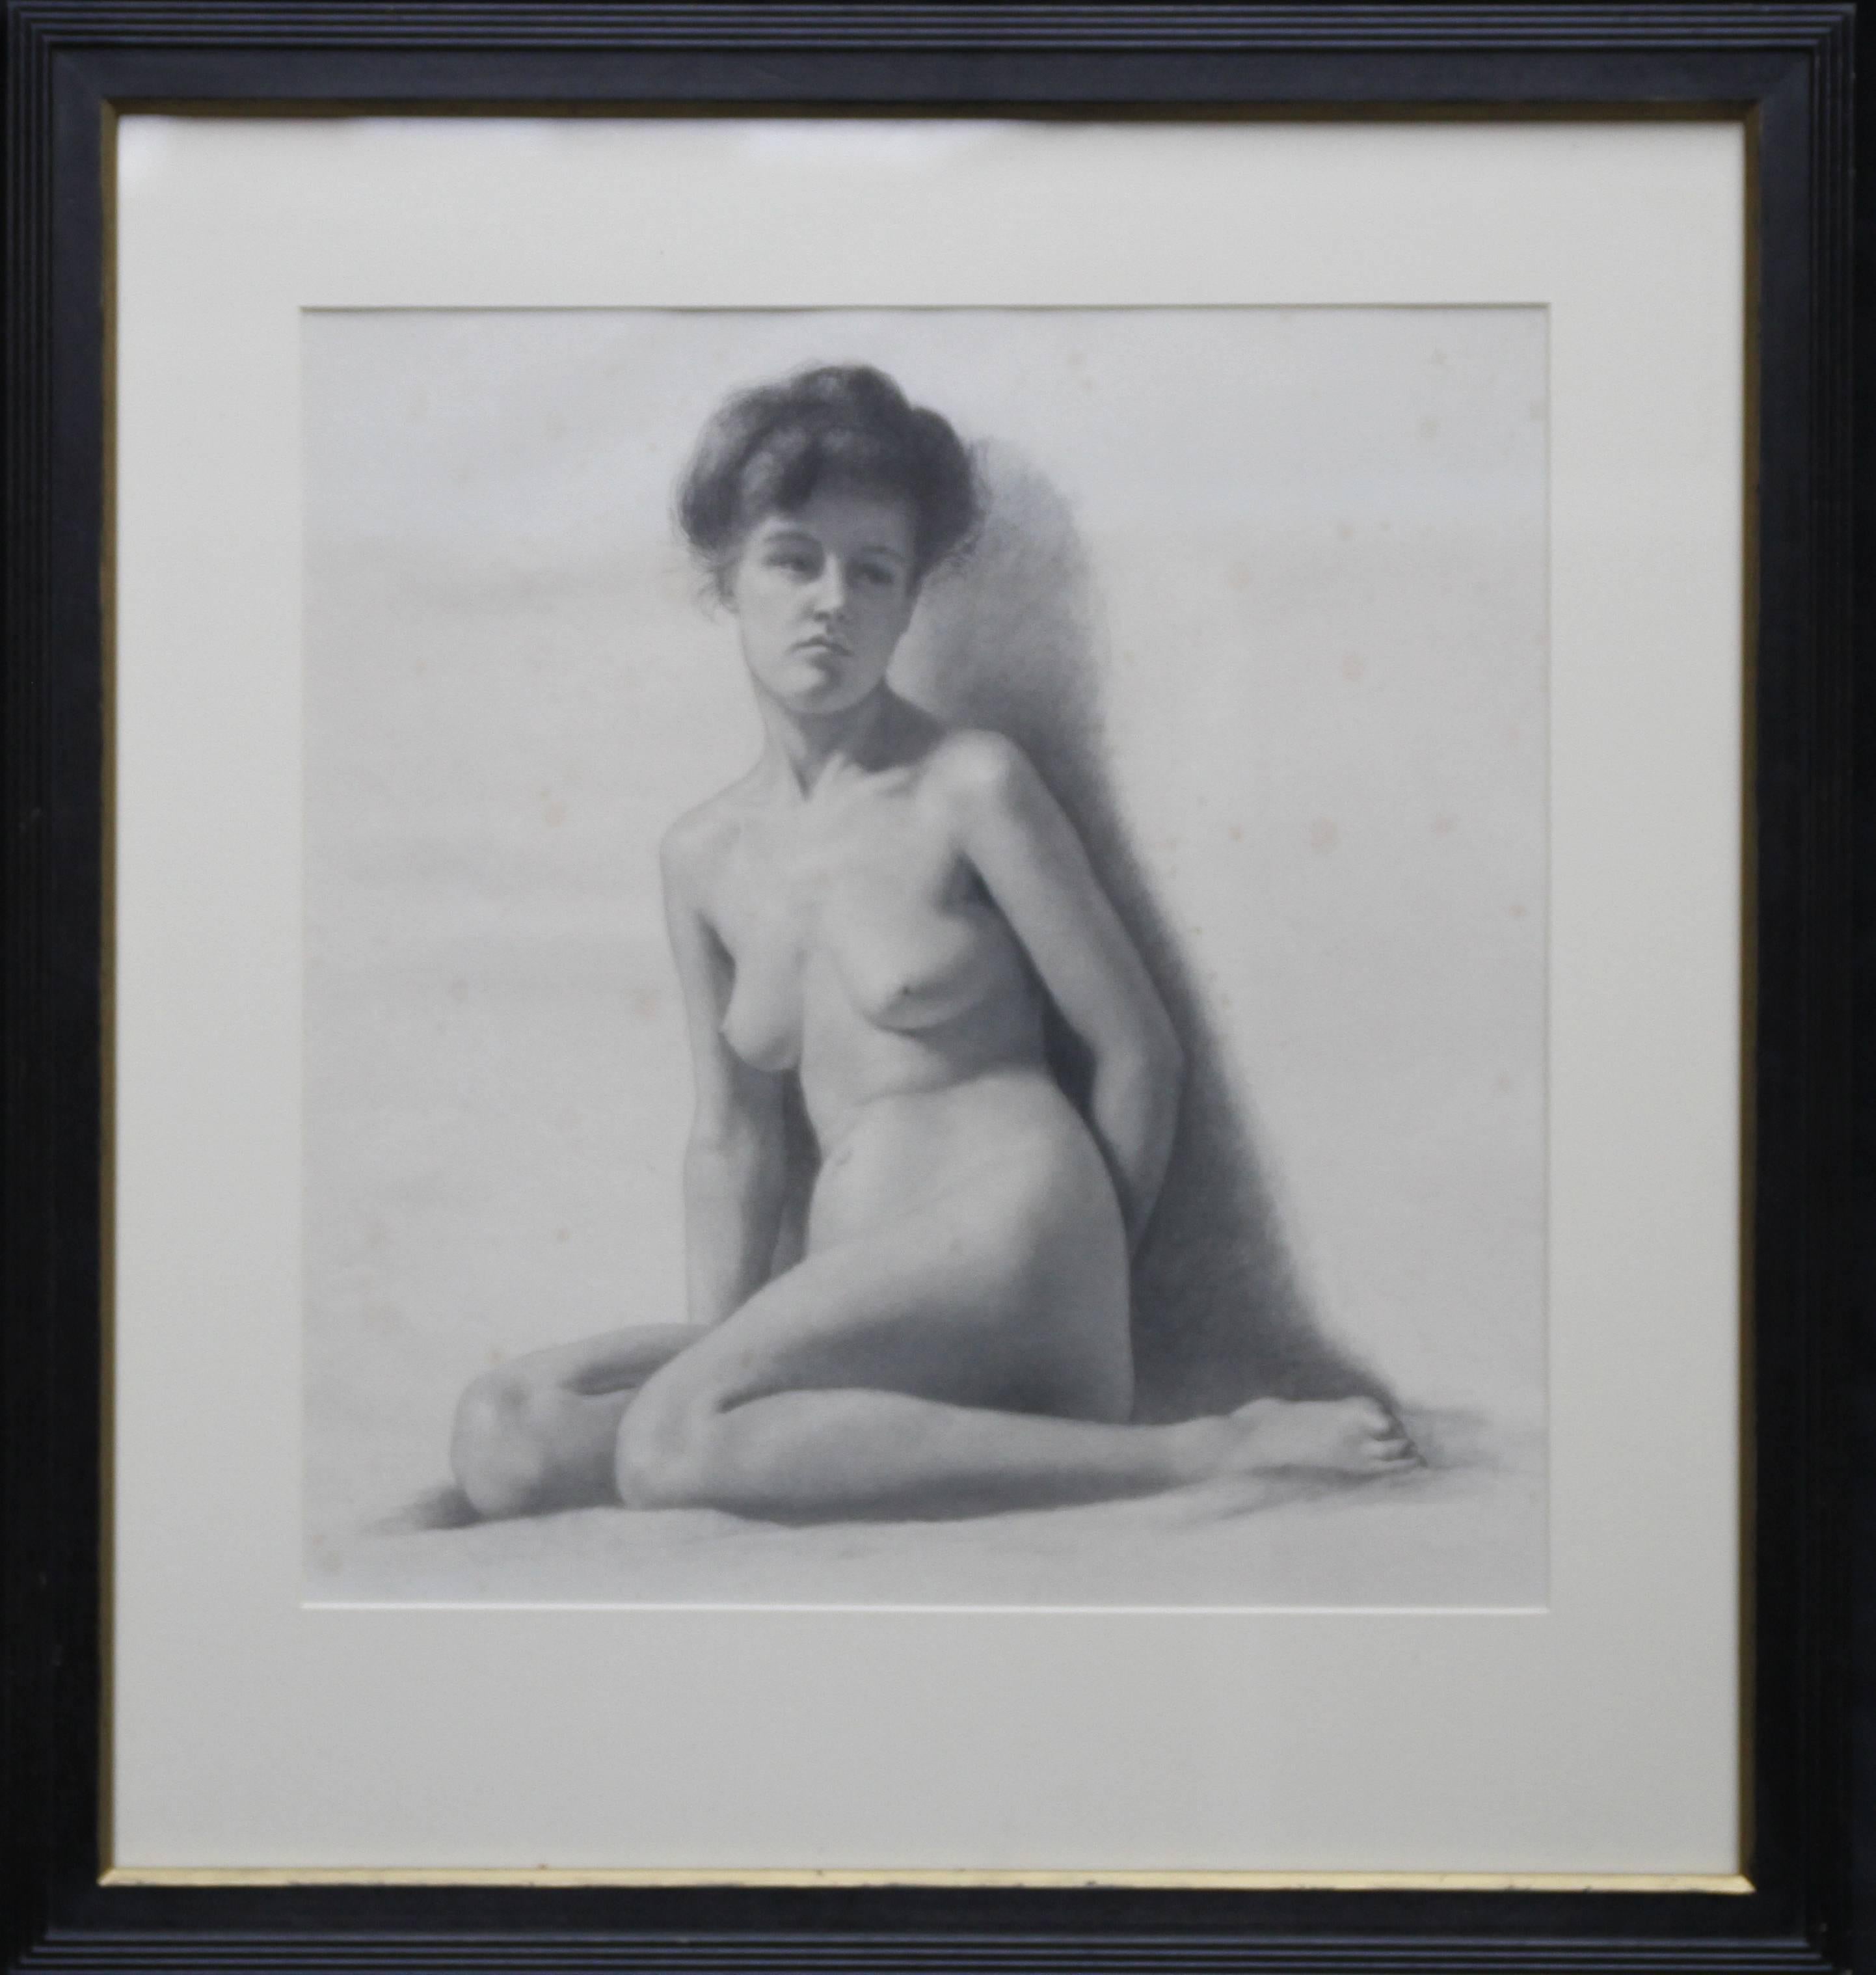 Nude Estella Canziani - Femme nue - Art britannique italien - Dessin de portrait de femme nue édouardien